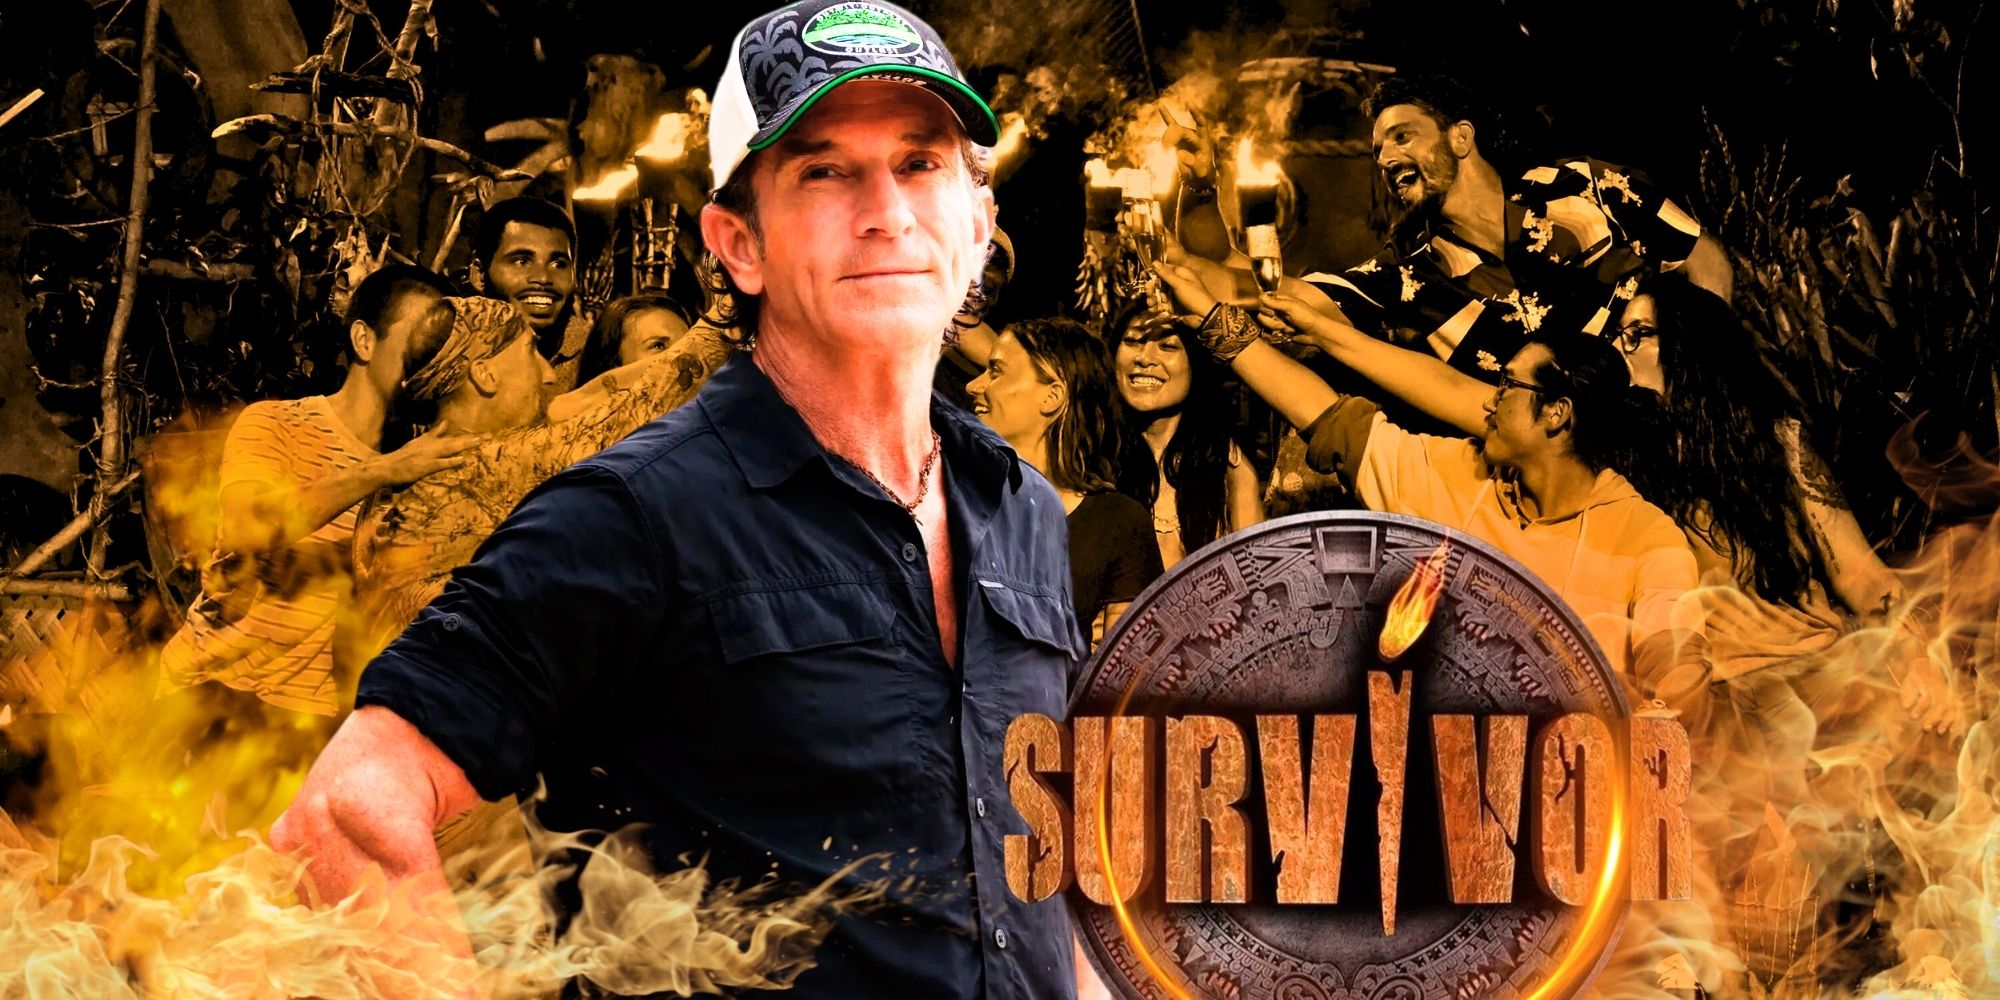 Survivor promo with Jeff Probst